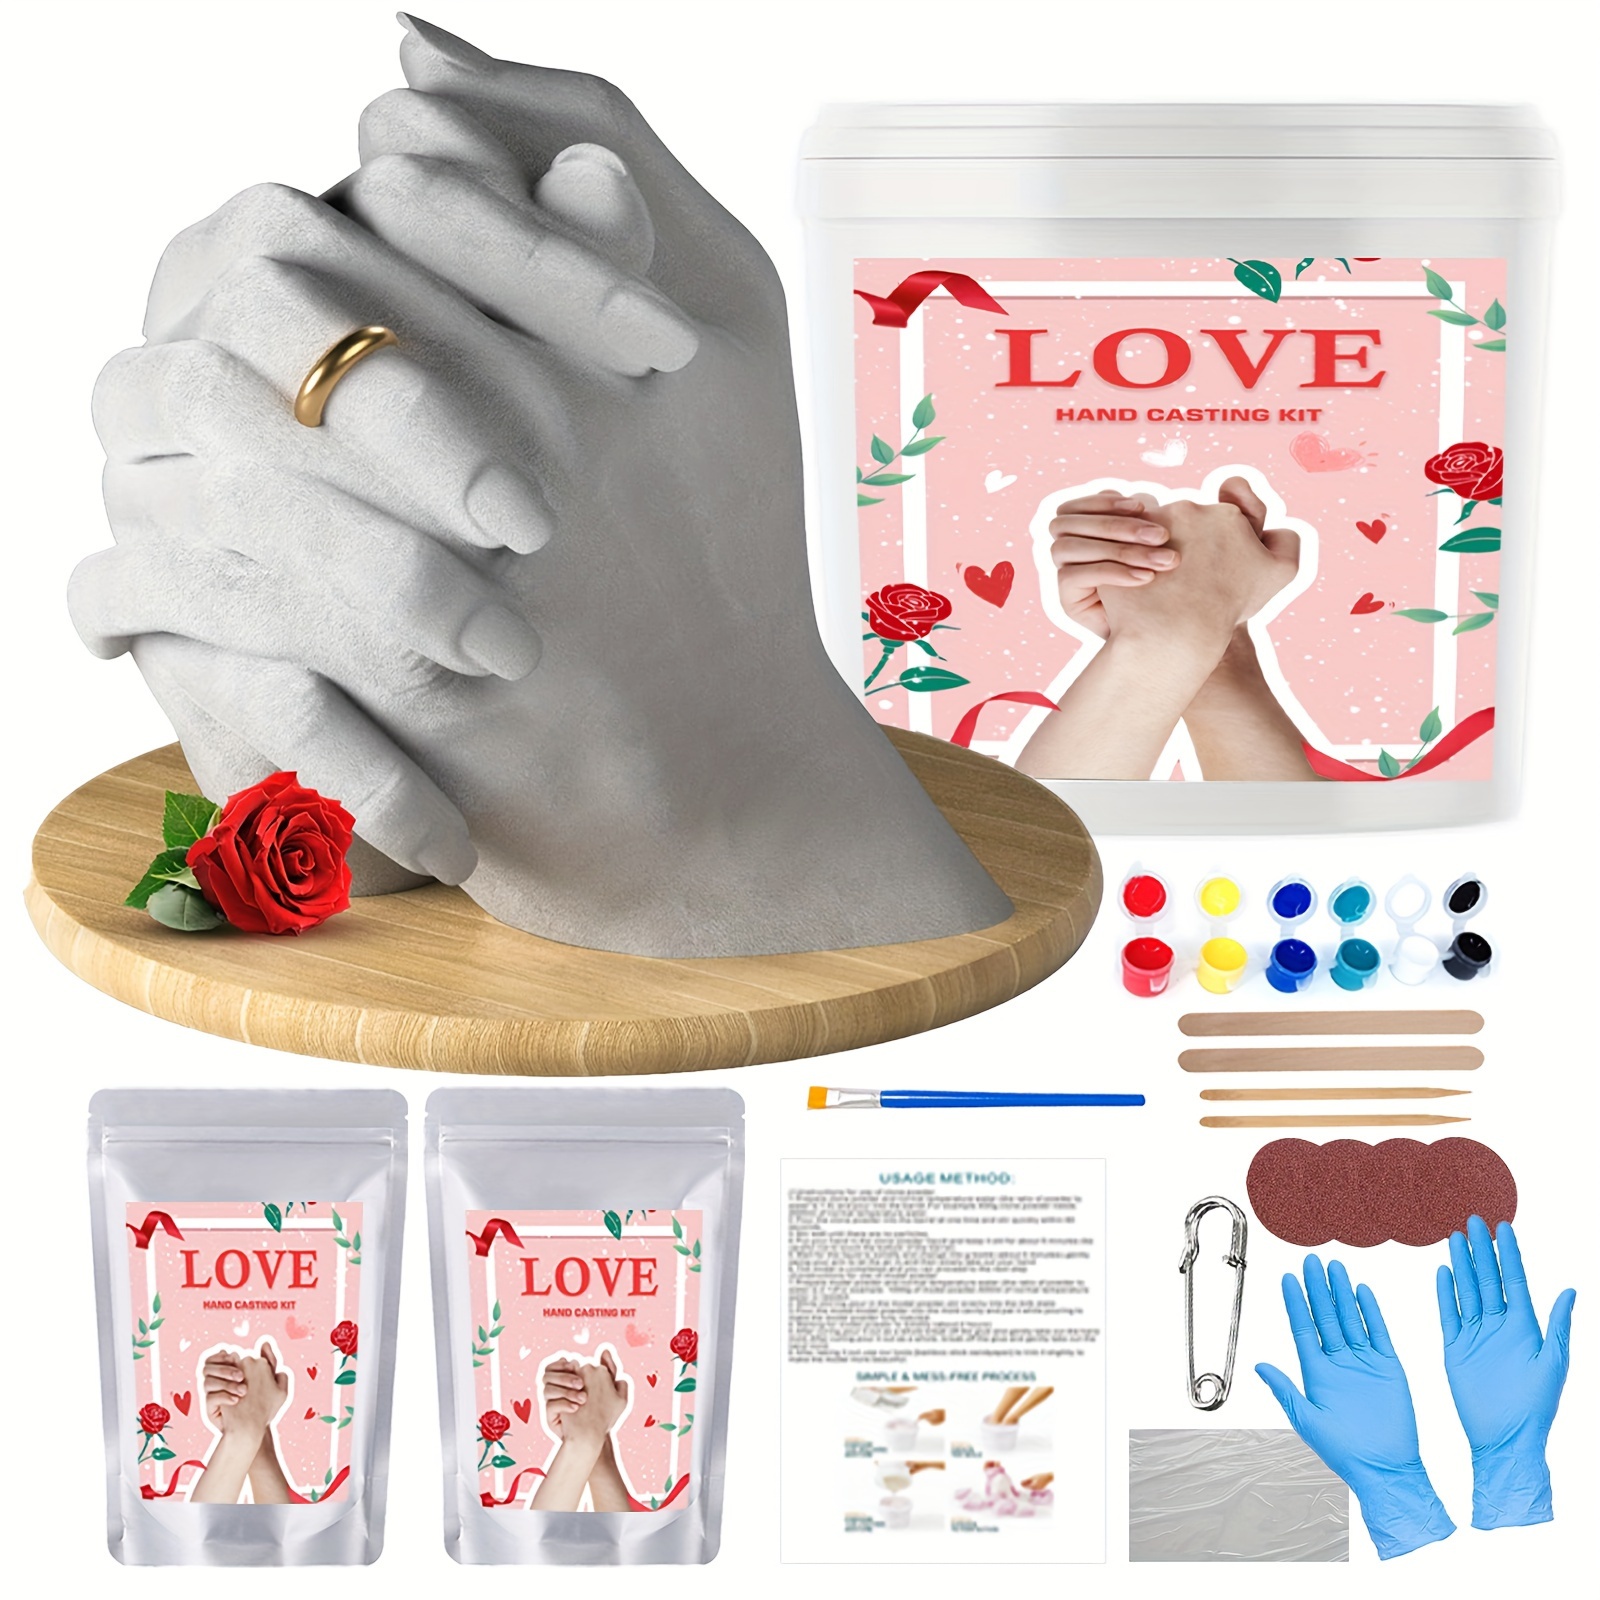 Hands DIY Hand Casting Kit DIY Plaster Statue Molding Kit 3D Hand Print Mold Powder Casting Kit Hand Holding Sculpture Kit Crafts for Family Adult